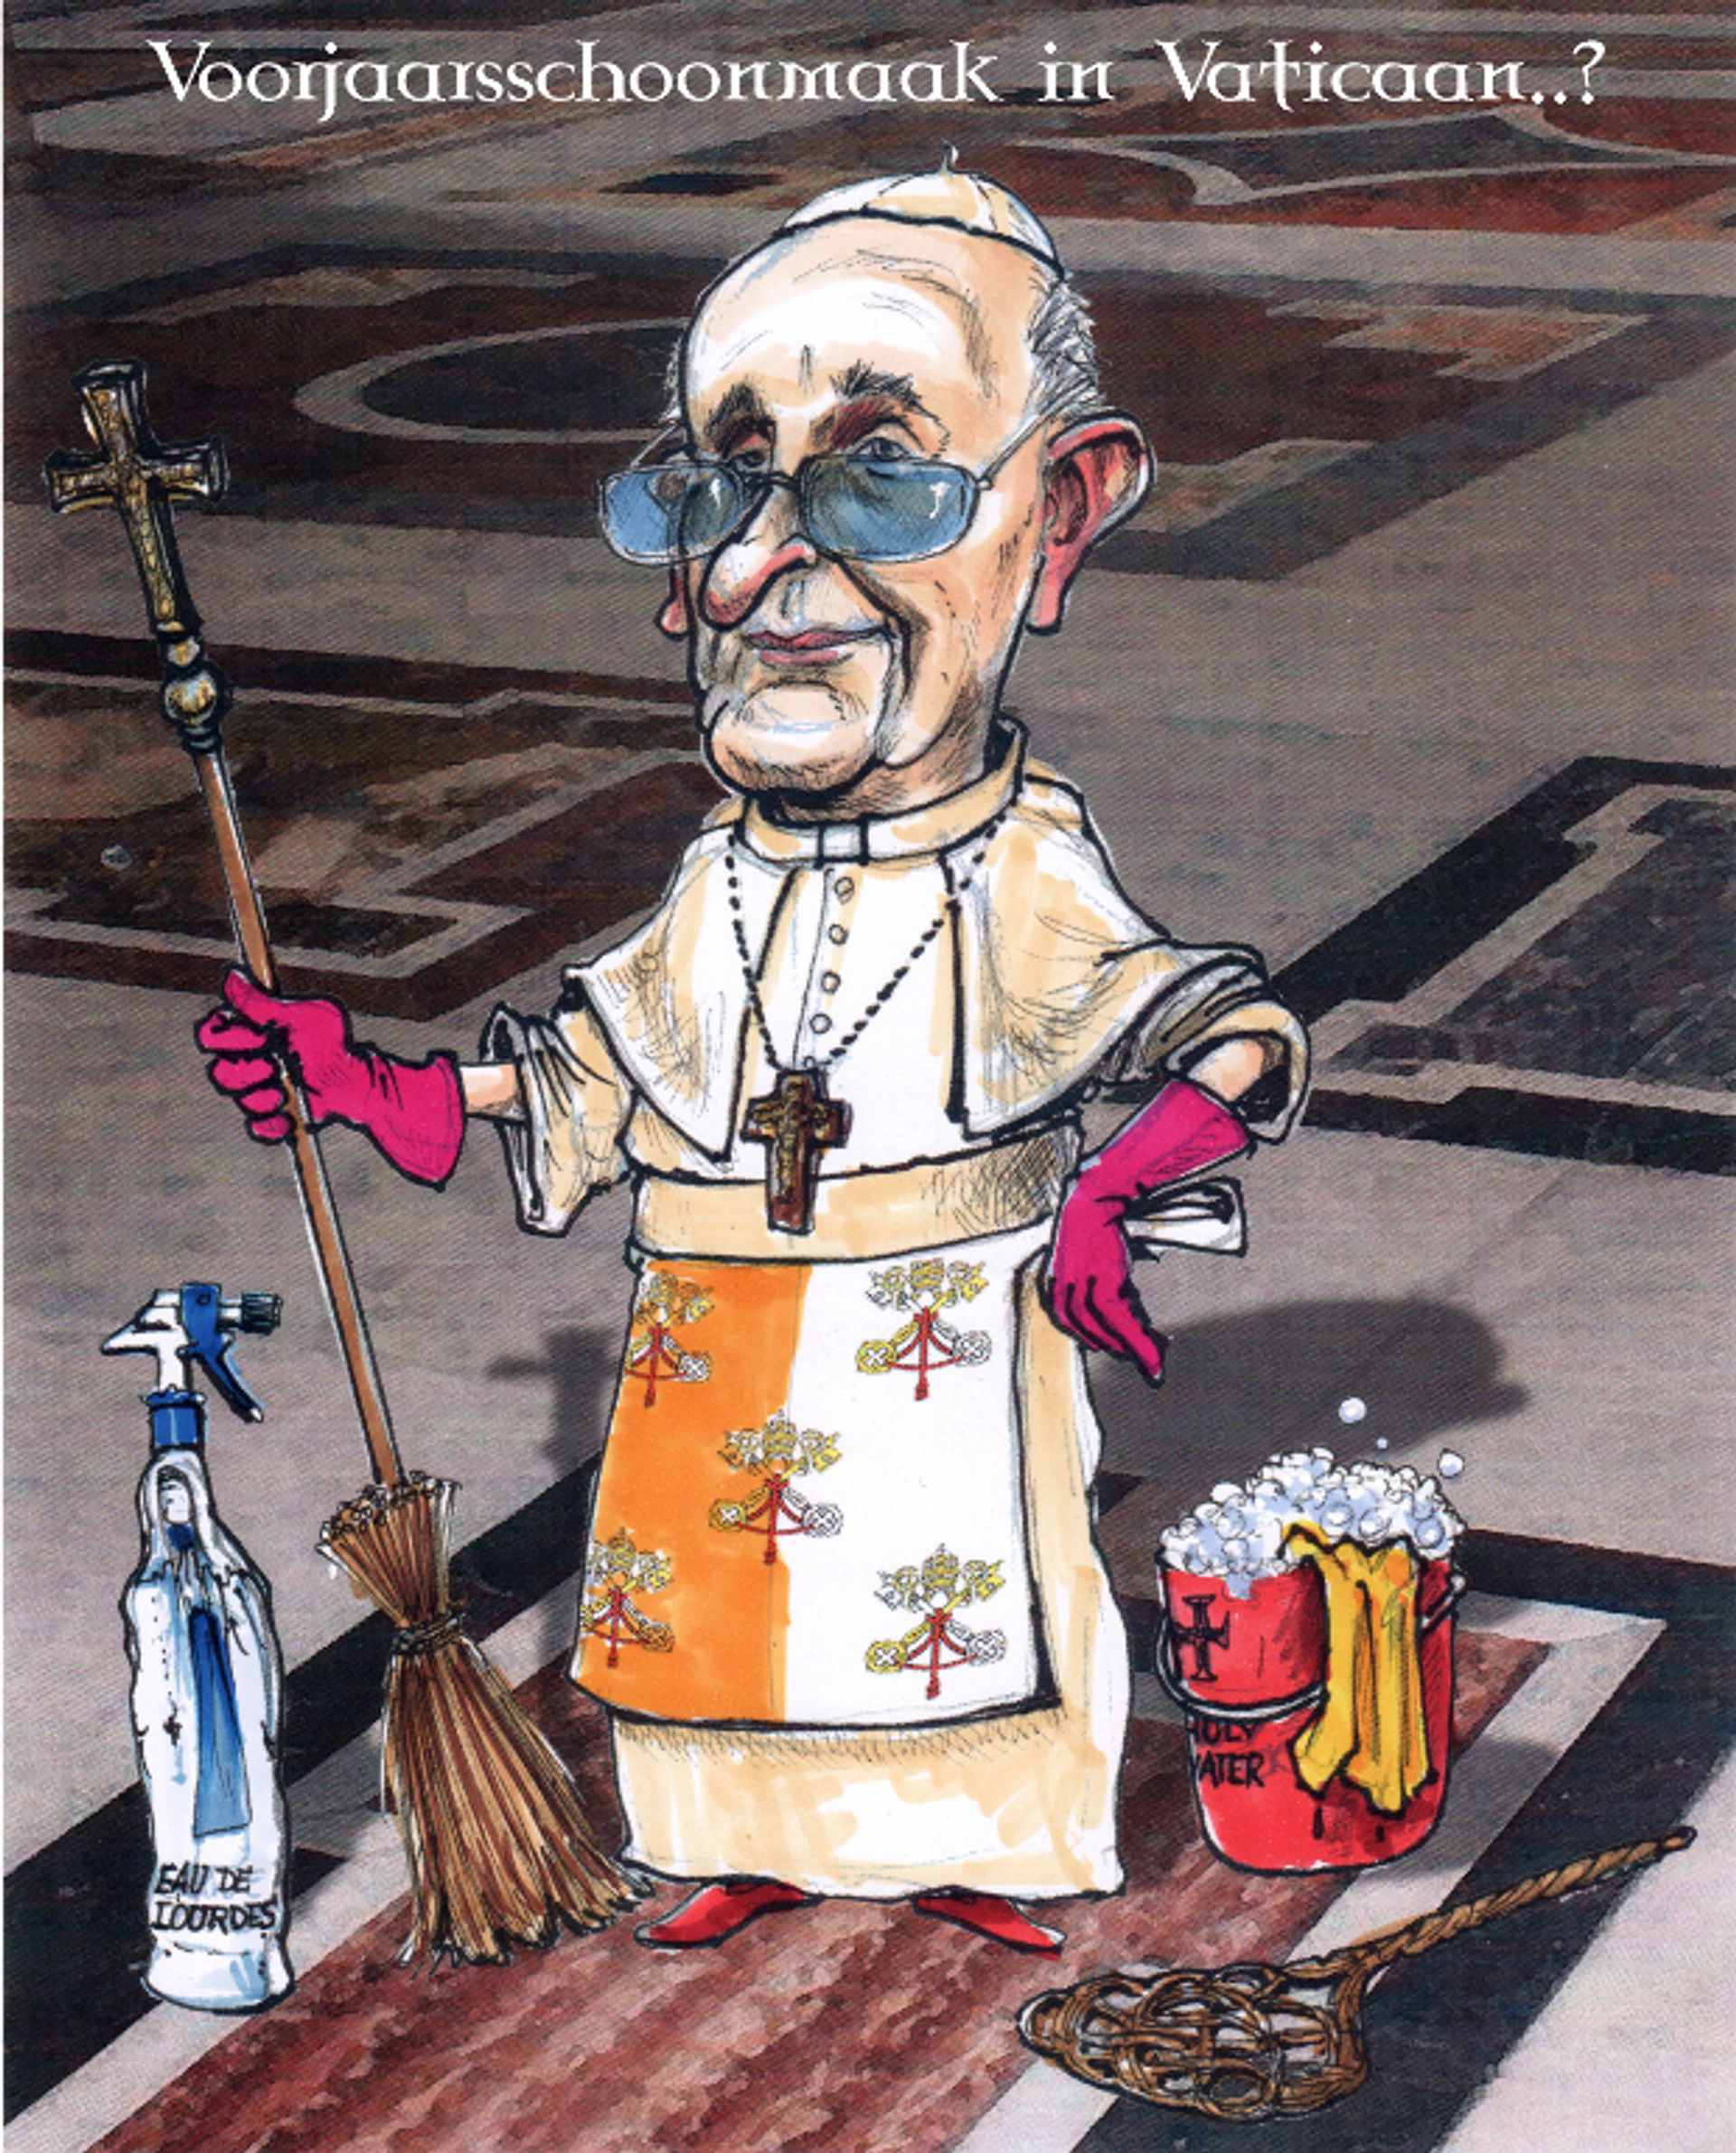 Vatican_spring_cleaning_620.jpg